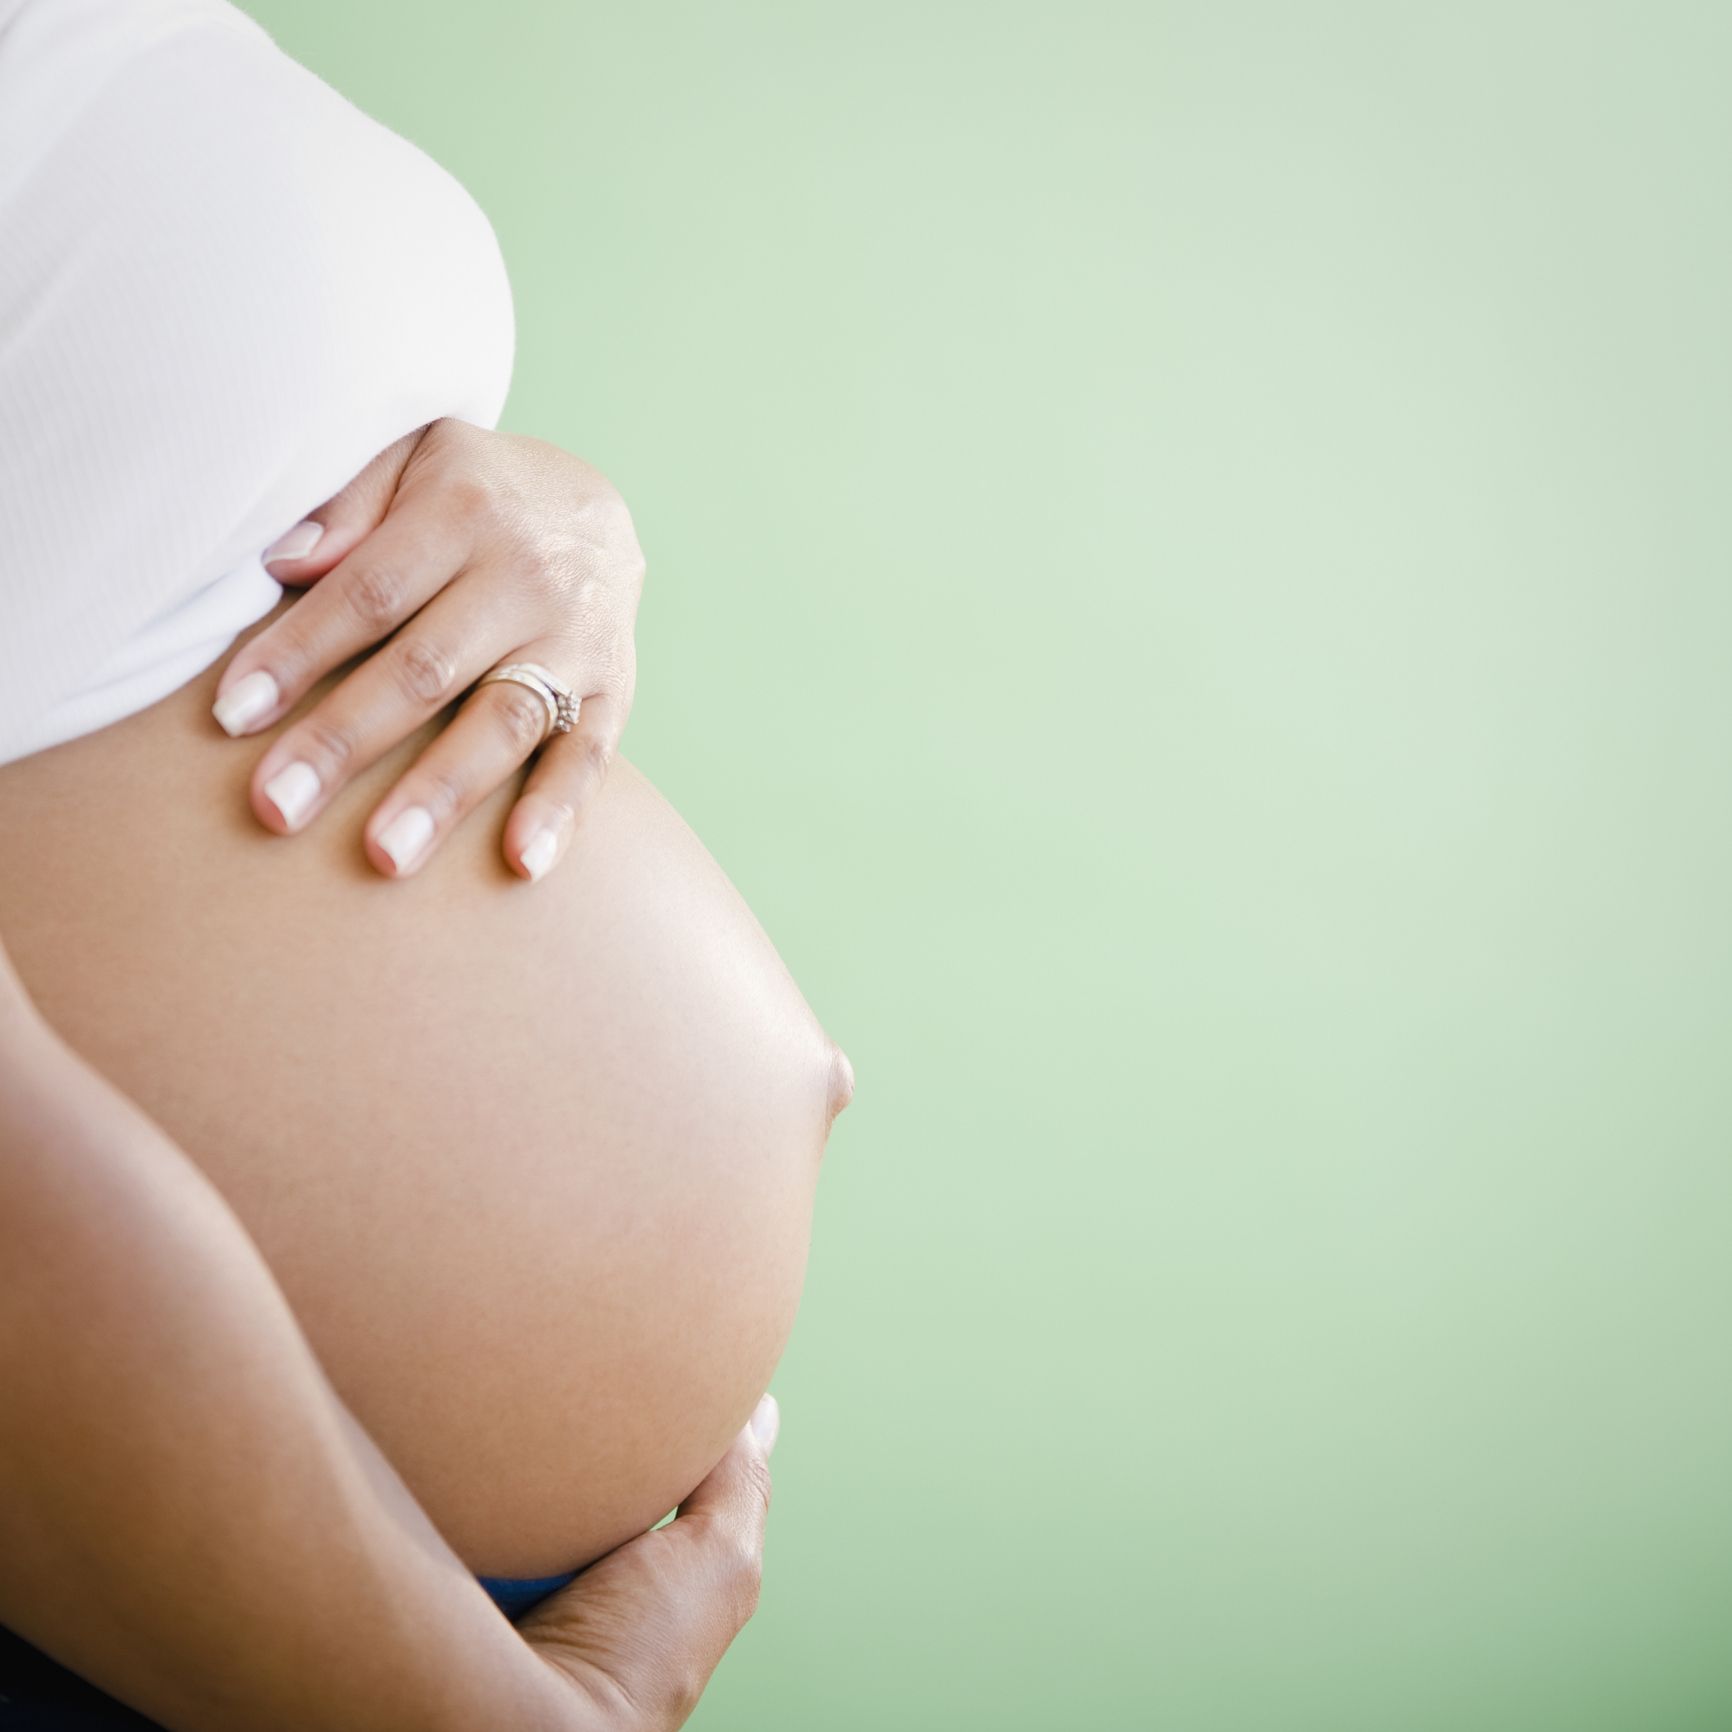 Pregnancy bump size: does your bump size matter?